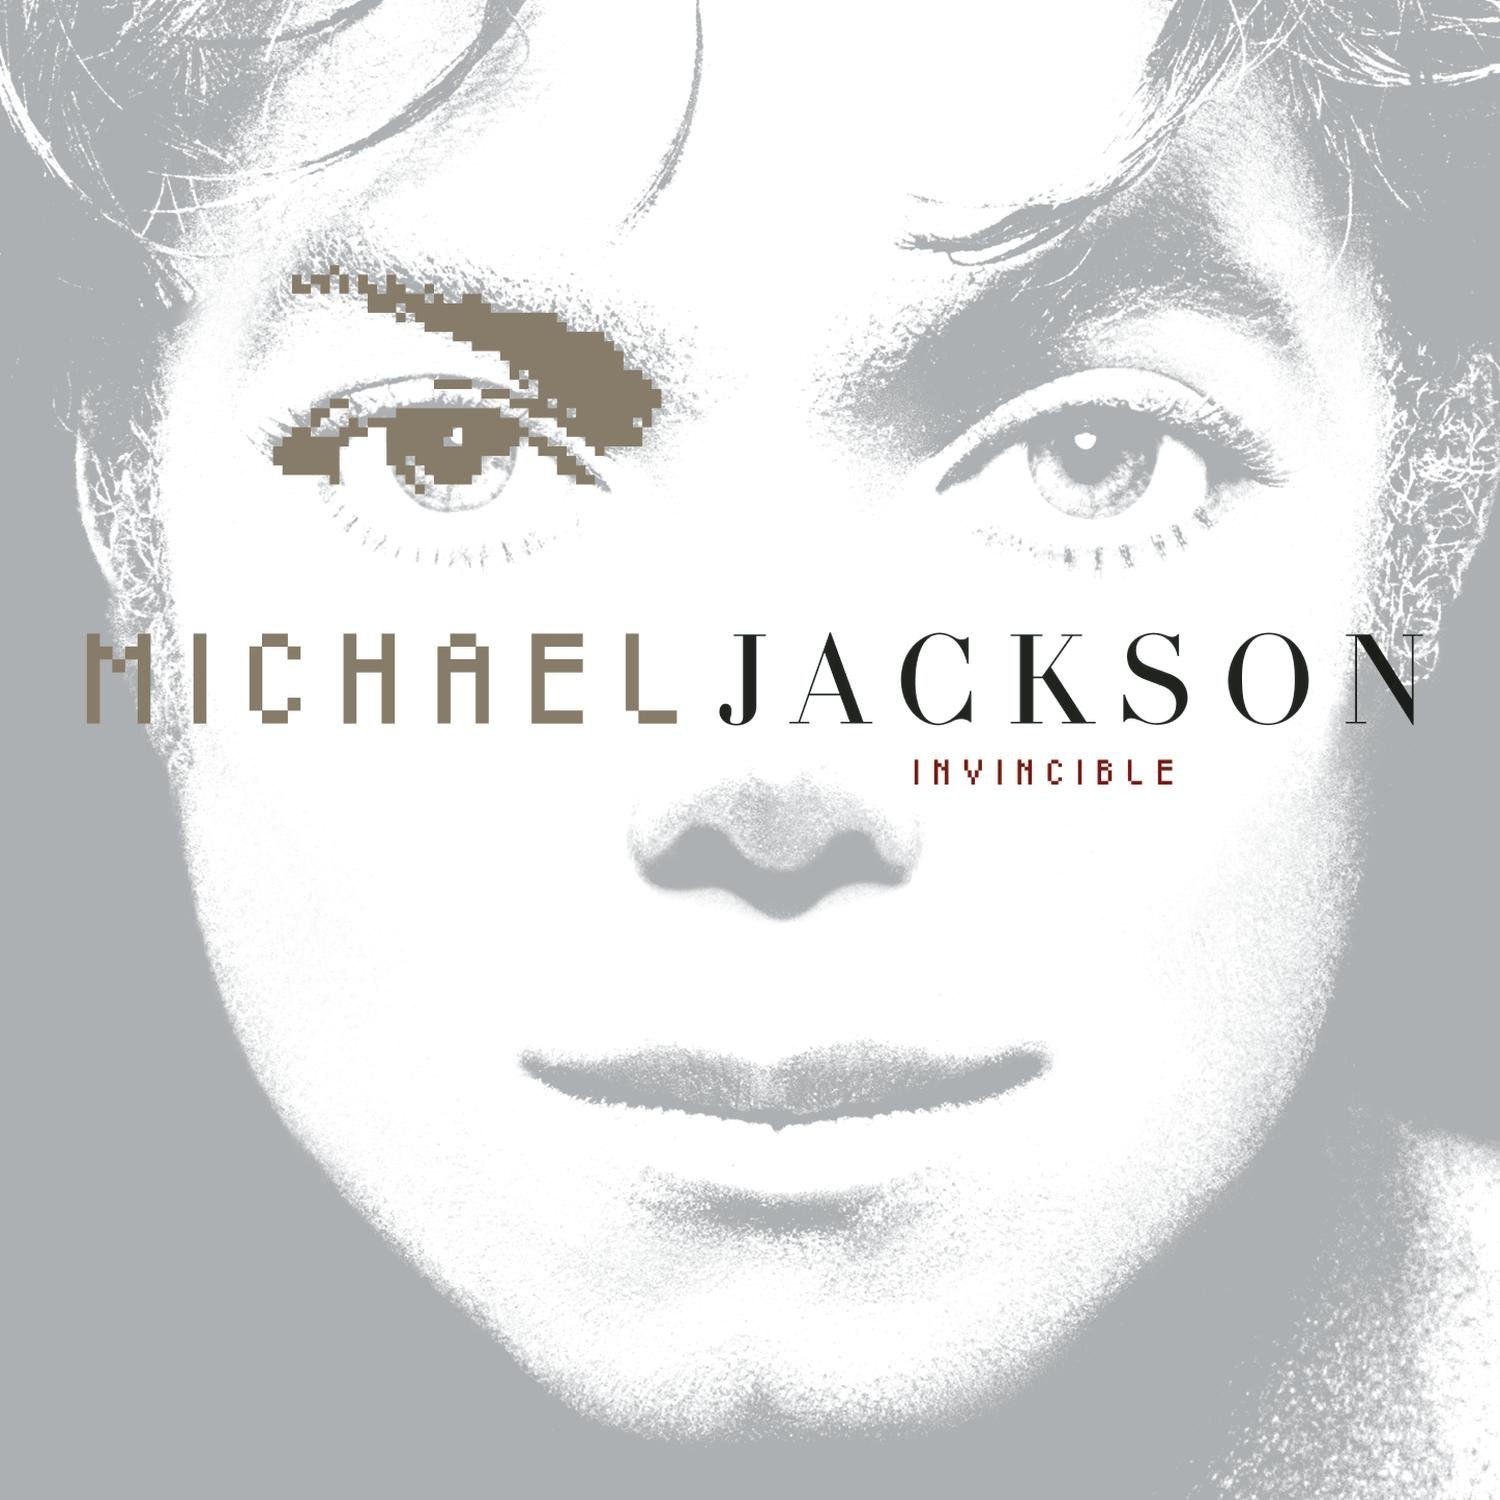 audio review : Invincible ( album ) ... Michael Jackson